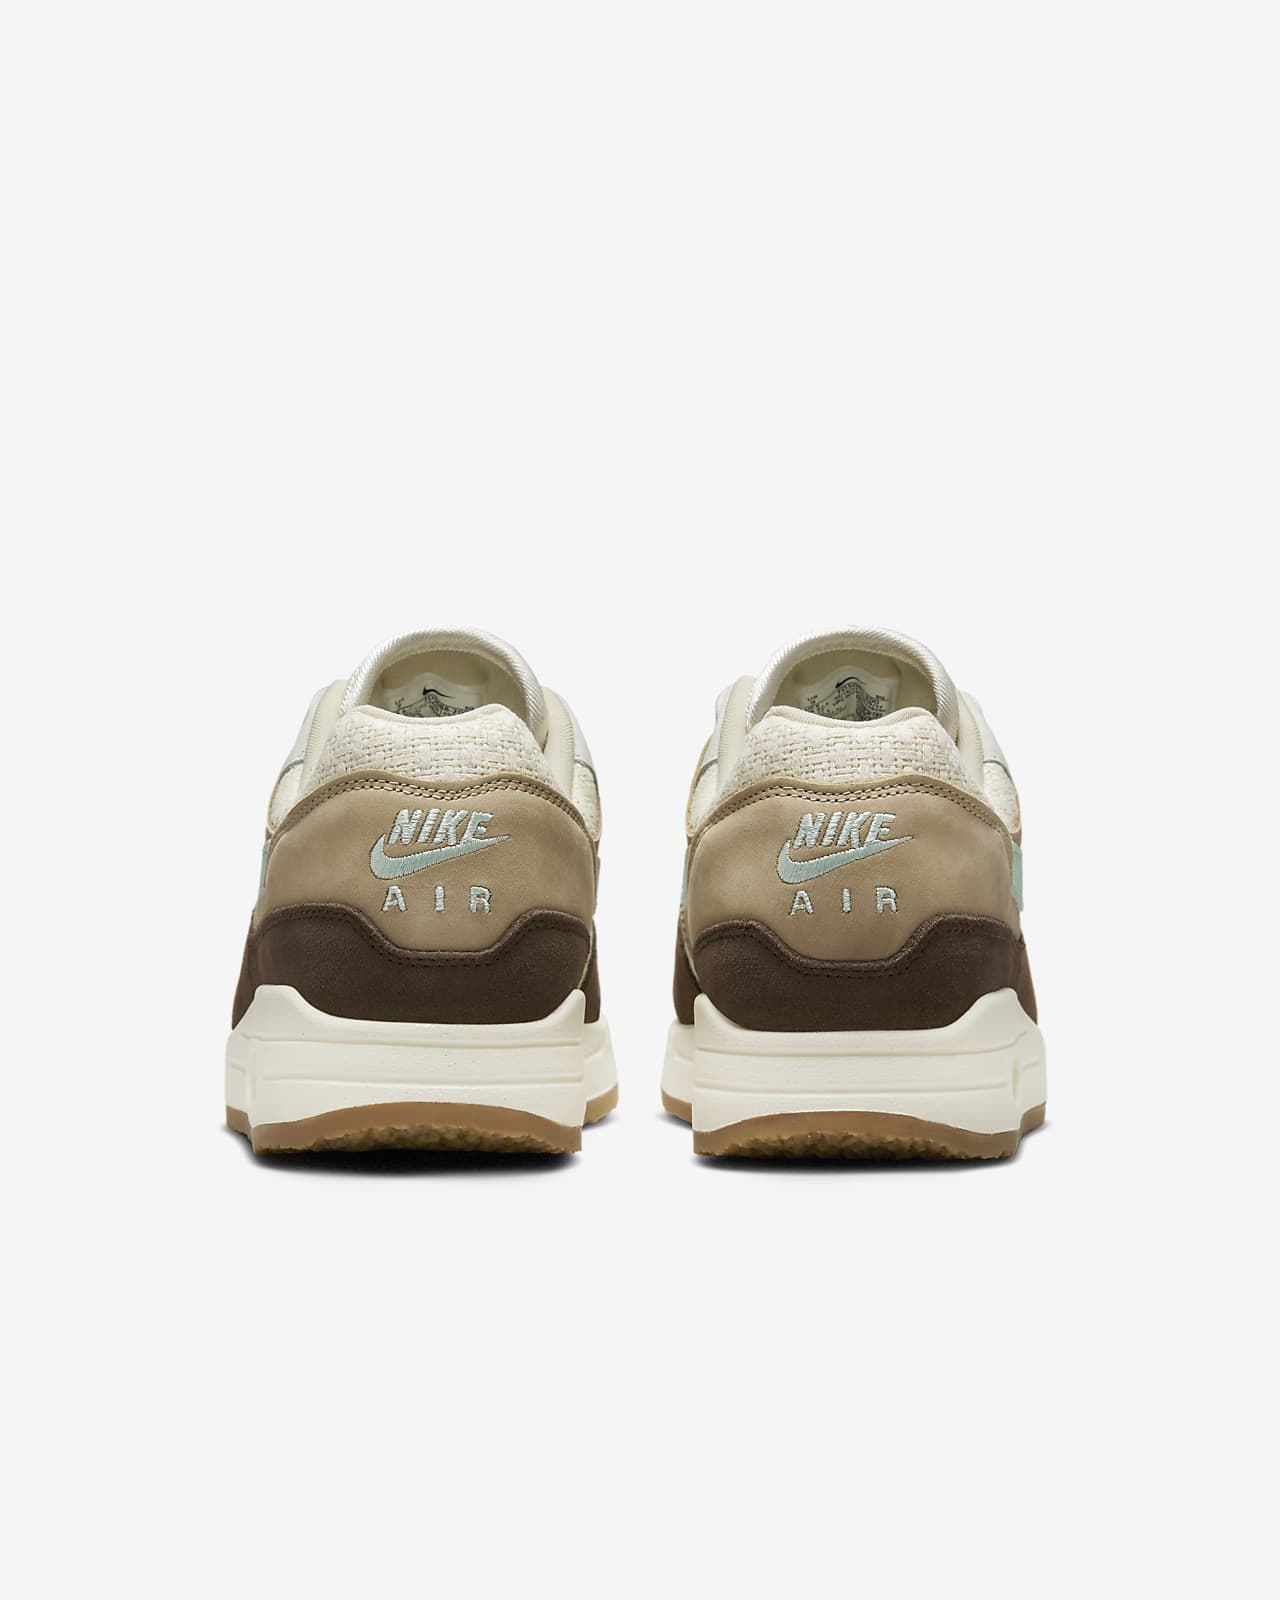 Nike Air Max 1 Premium 2 Shoes. 